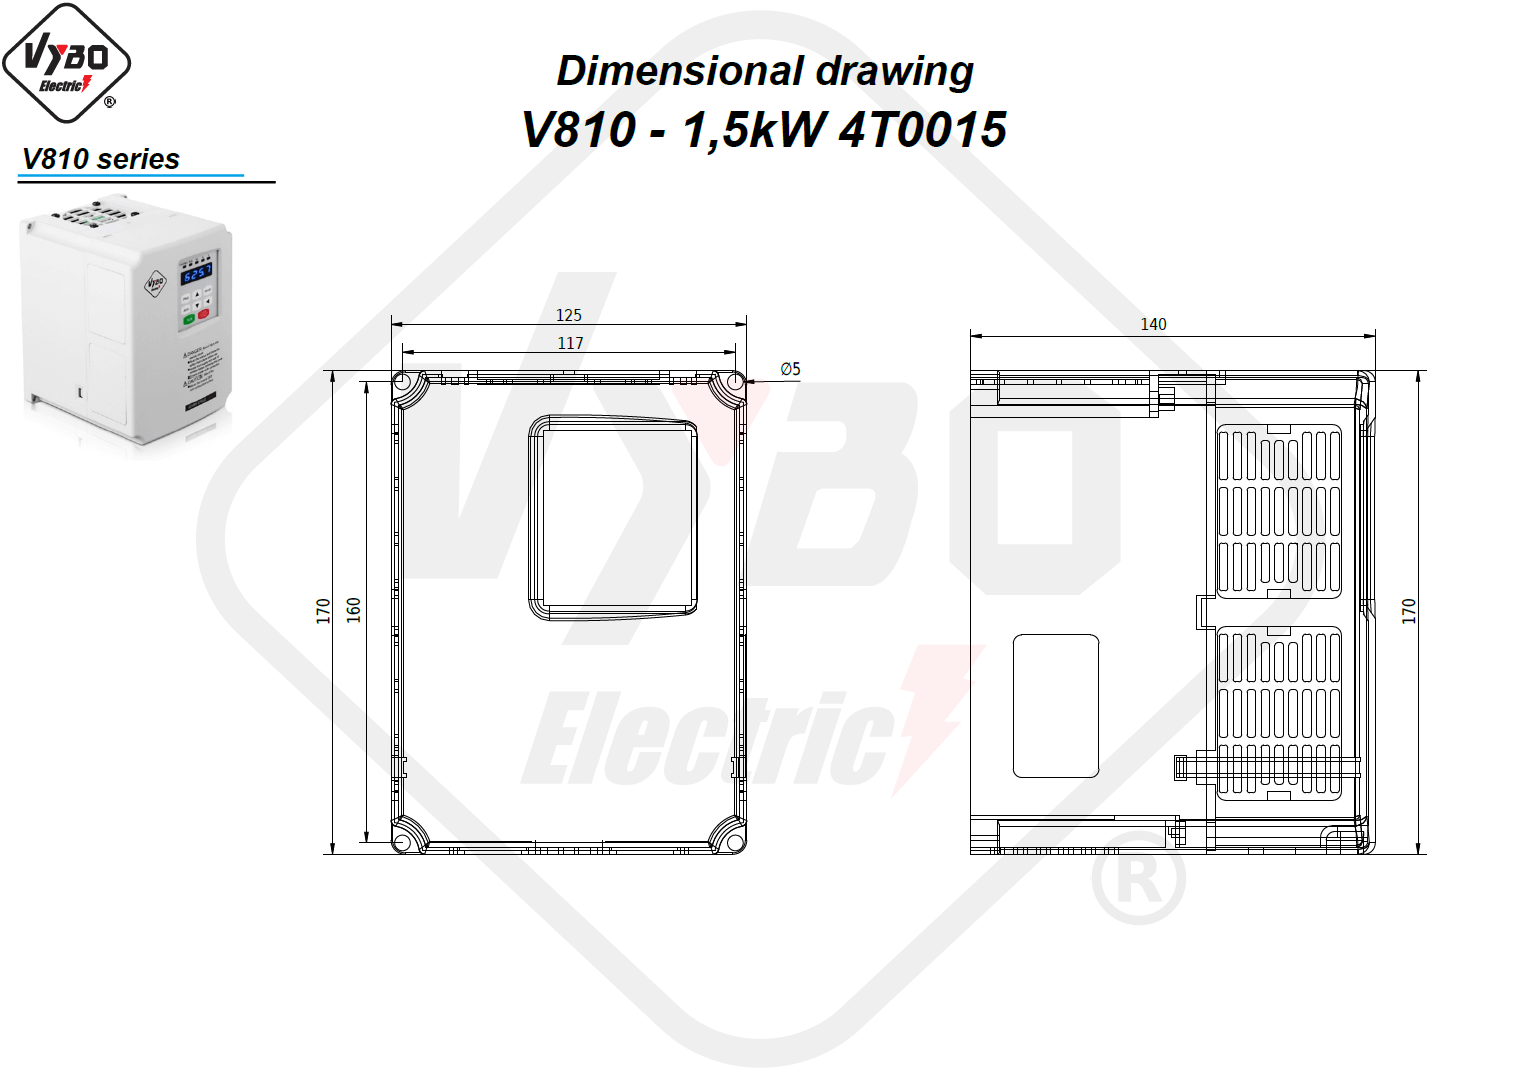 dimensional drawing V810 4T0015